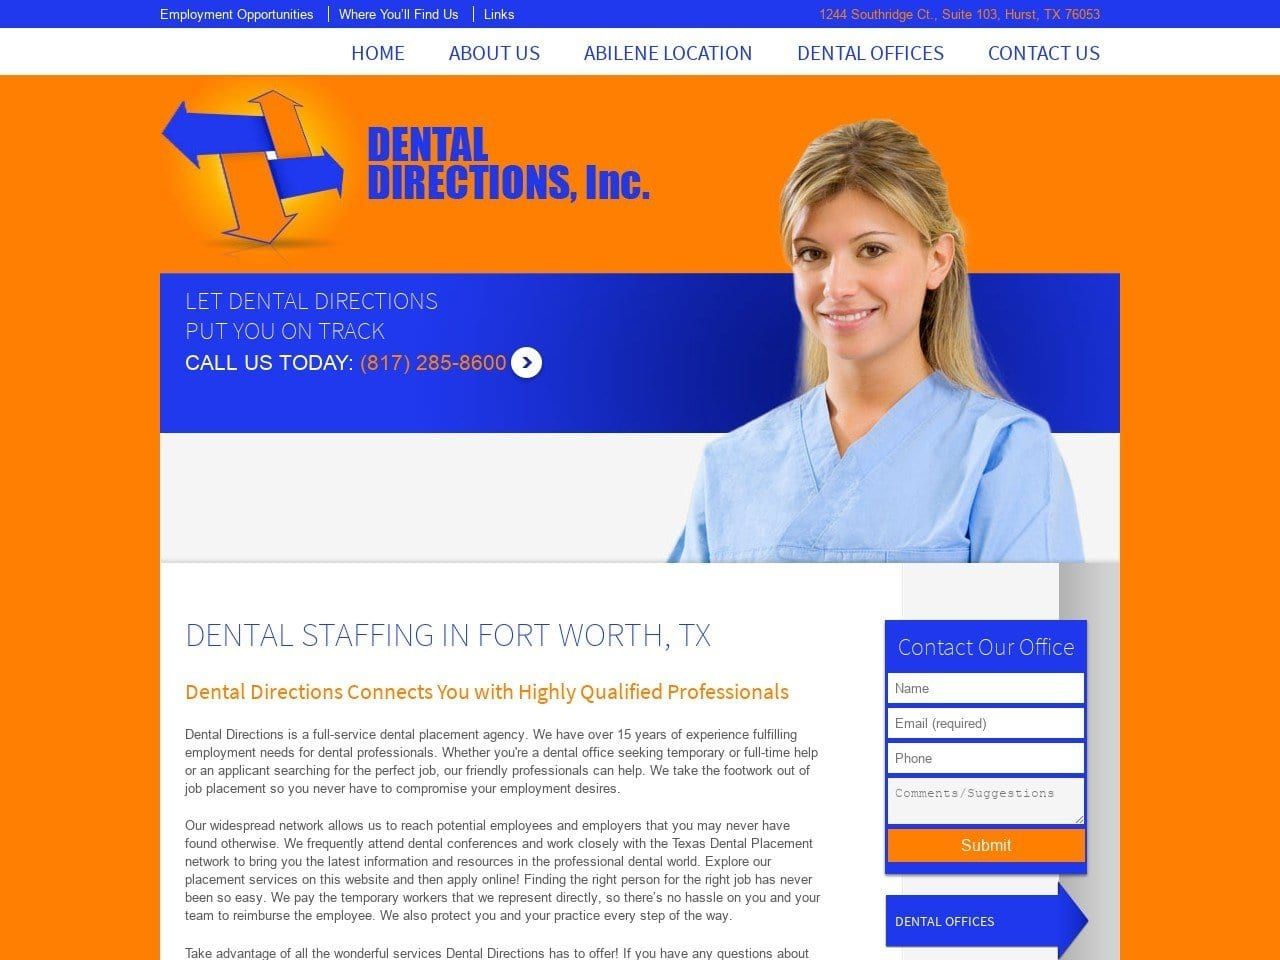 Dental Directions Inc. Website Screenshot from dental-directions.com